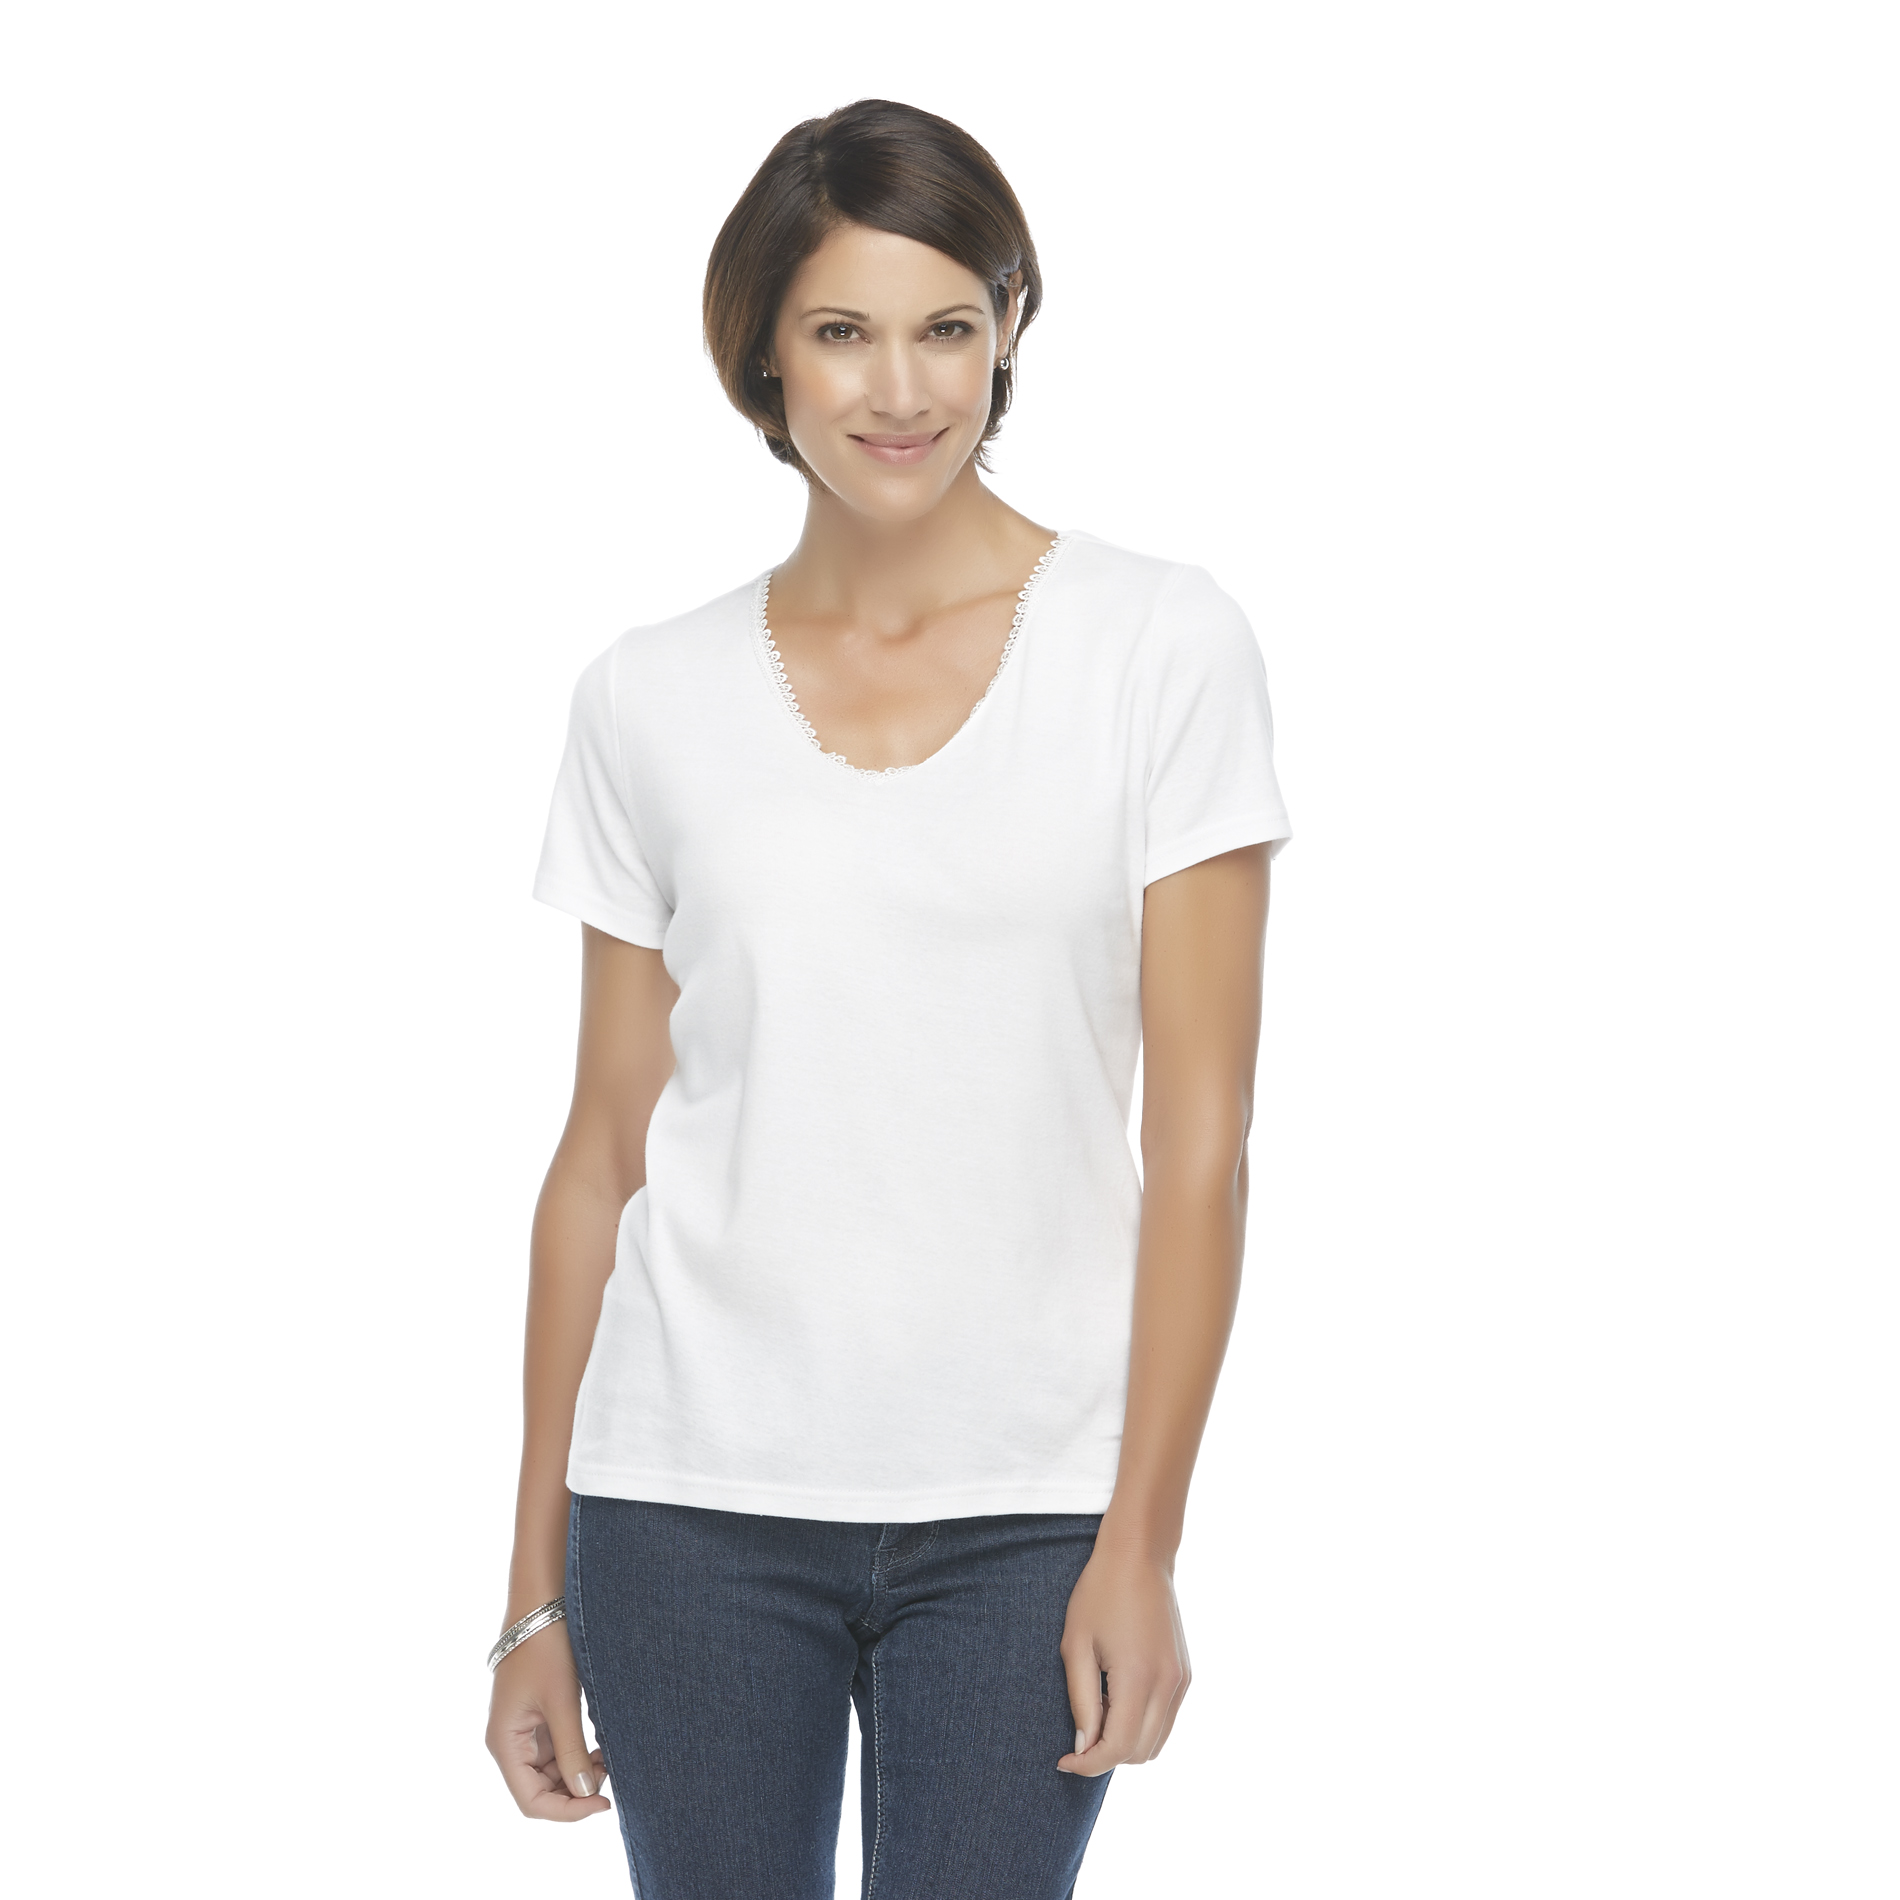 Basic Editions Women's Lace V-Neck T-Shirt